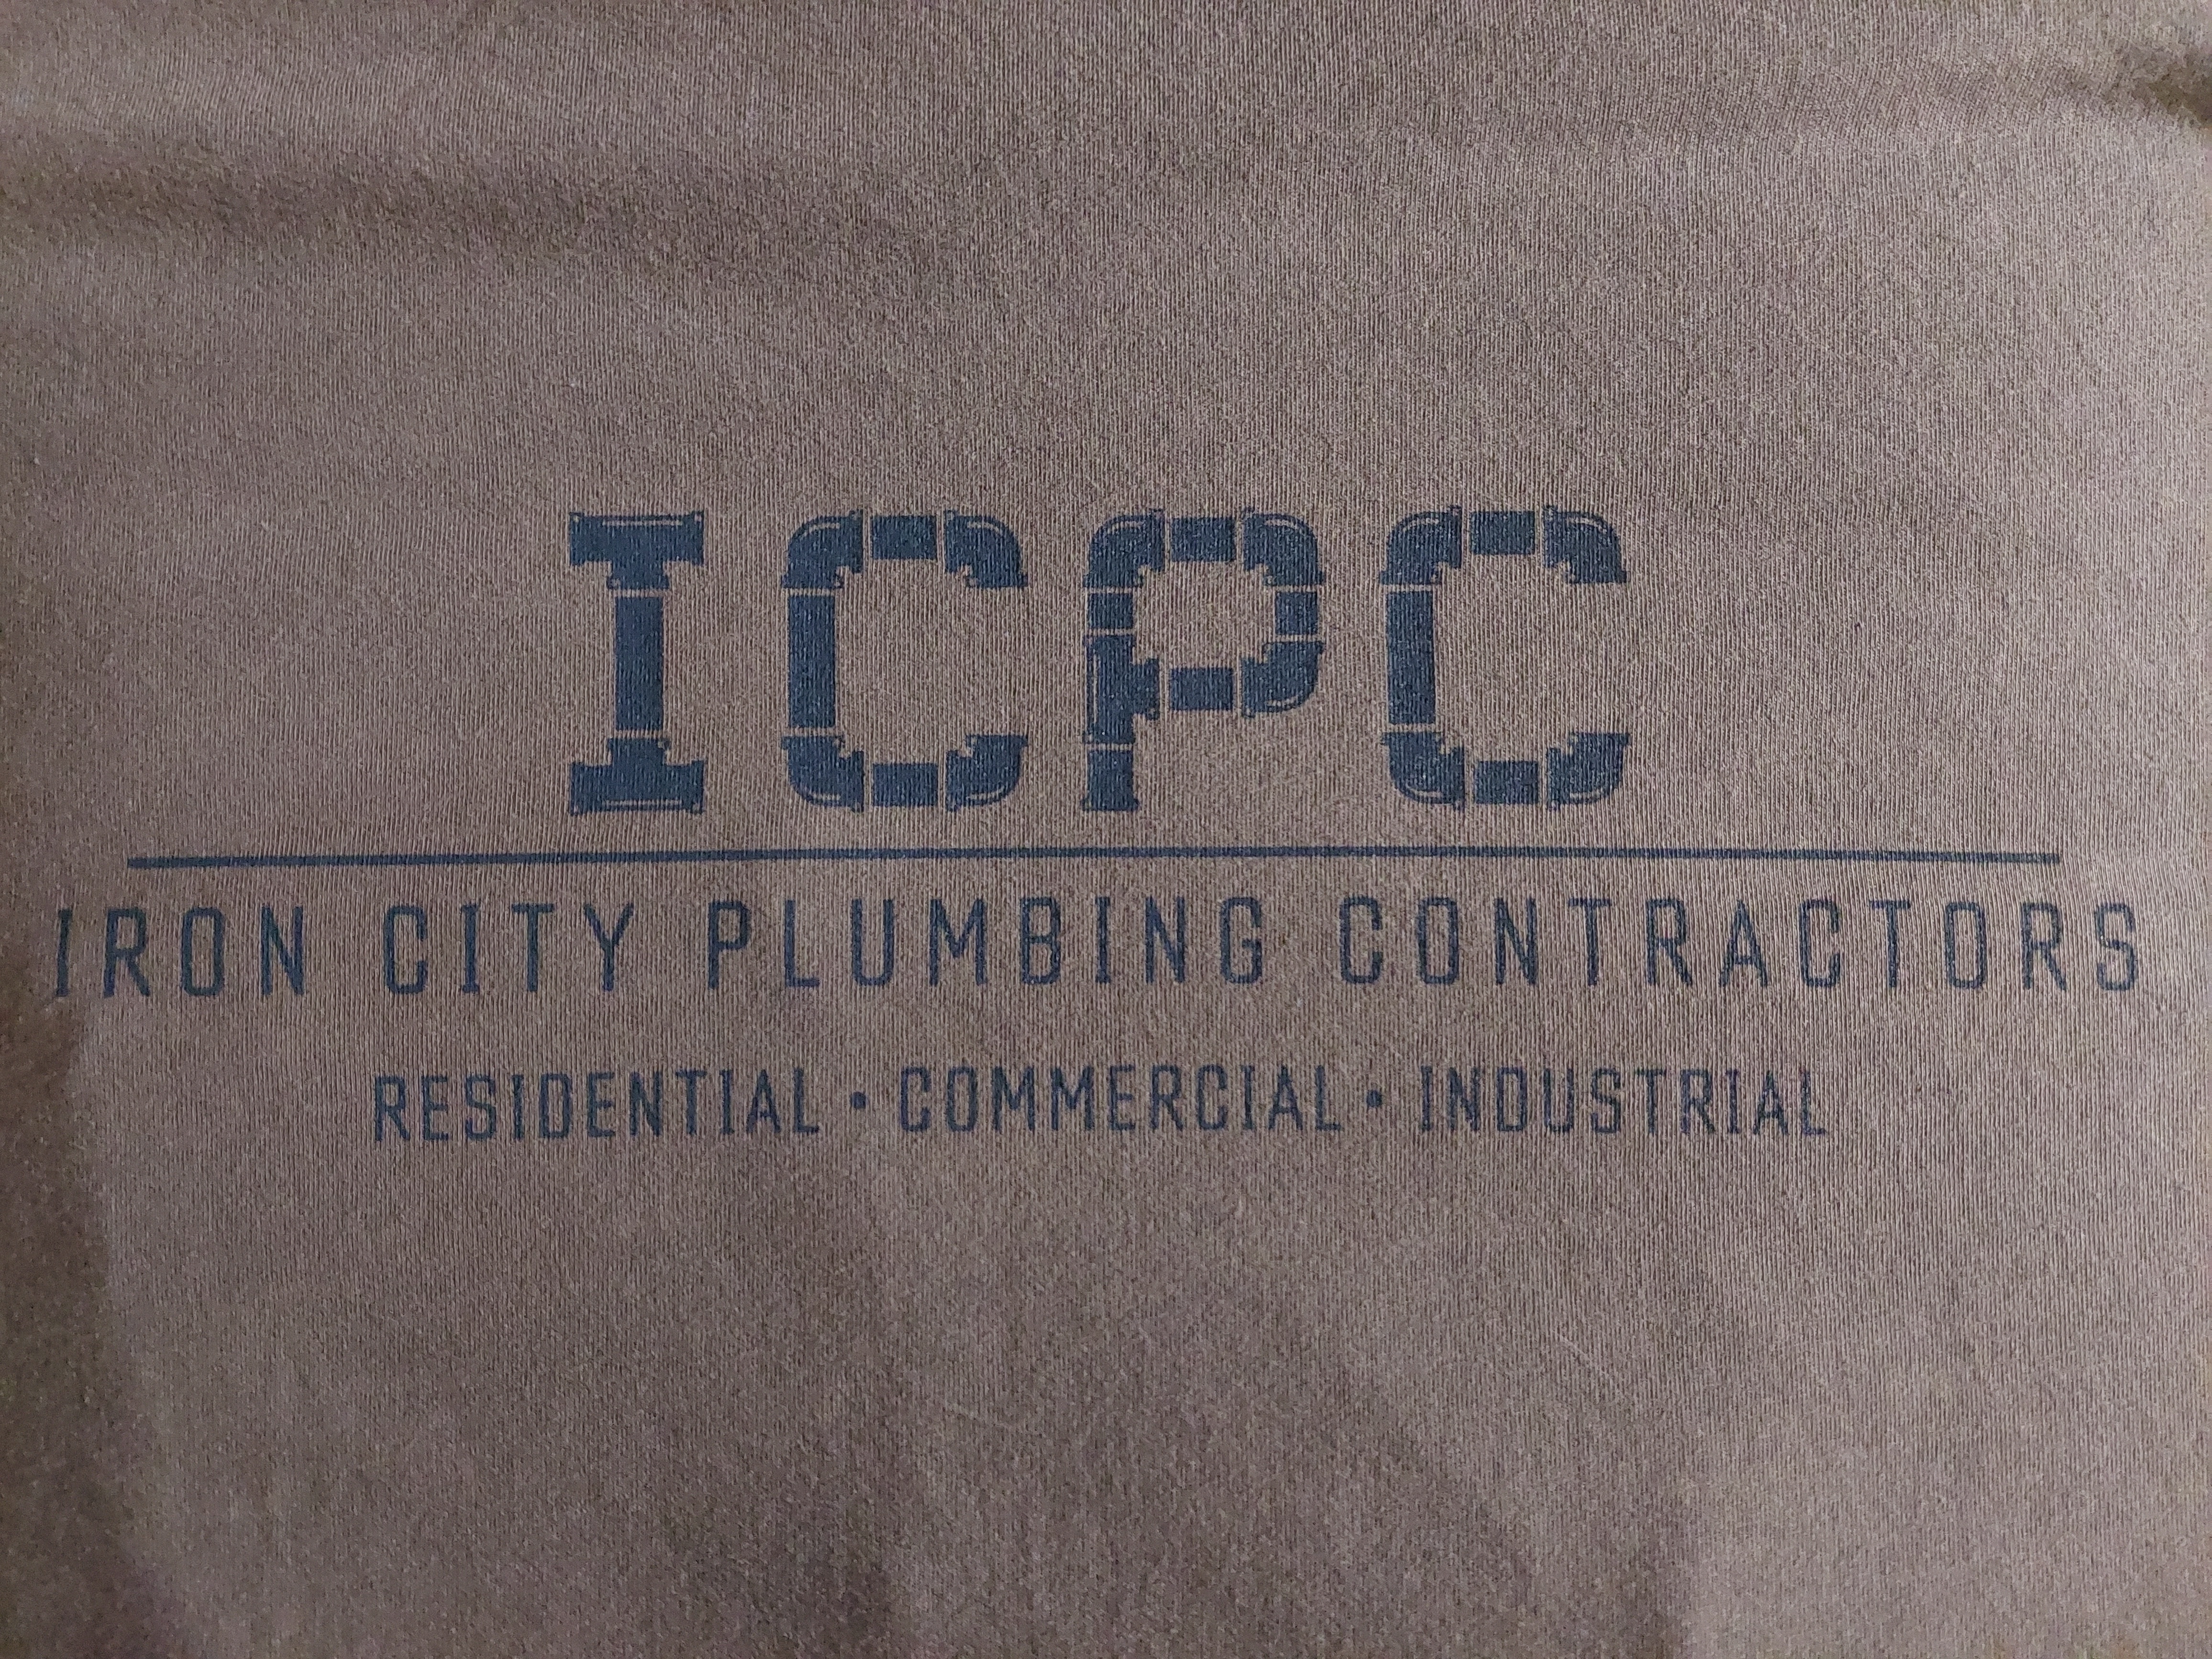 Iron City Plumbing Contractors, LLC Logo